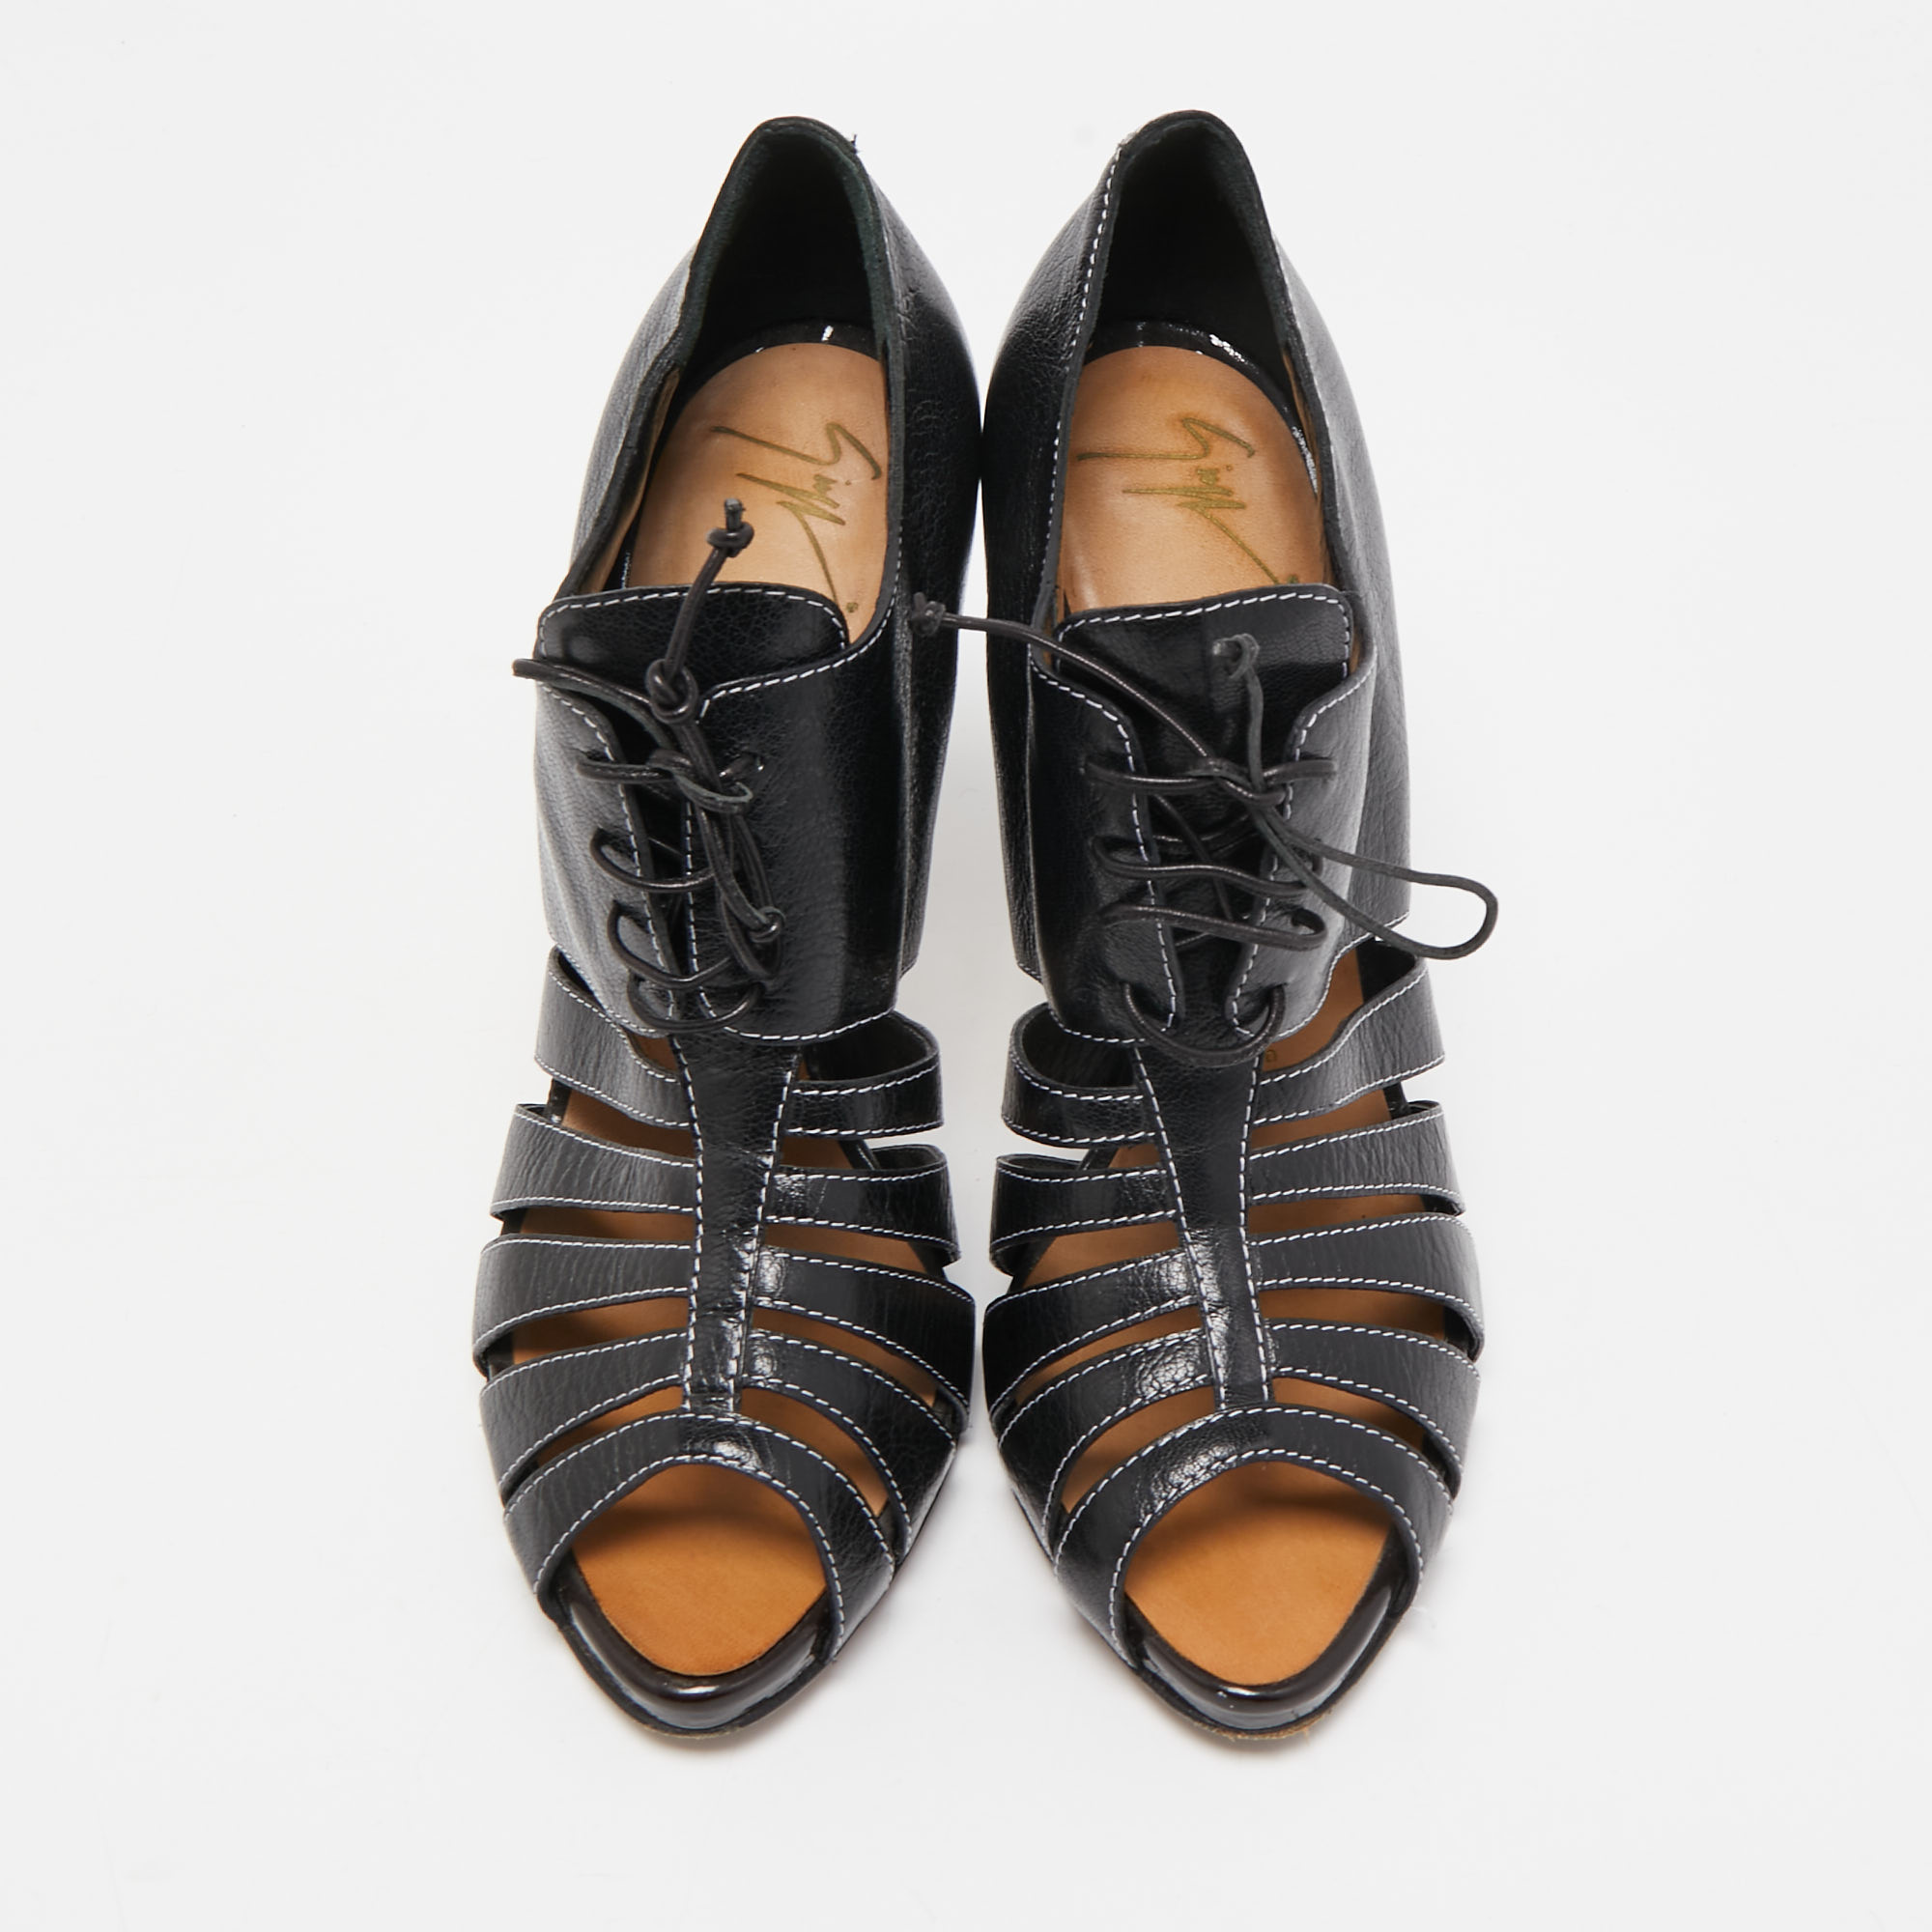 Giuseppe Zanotti Black Leather Oxford Peep Toe Ankle Boots Size 39.5